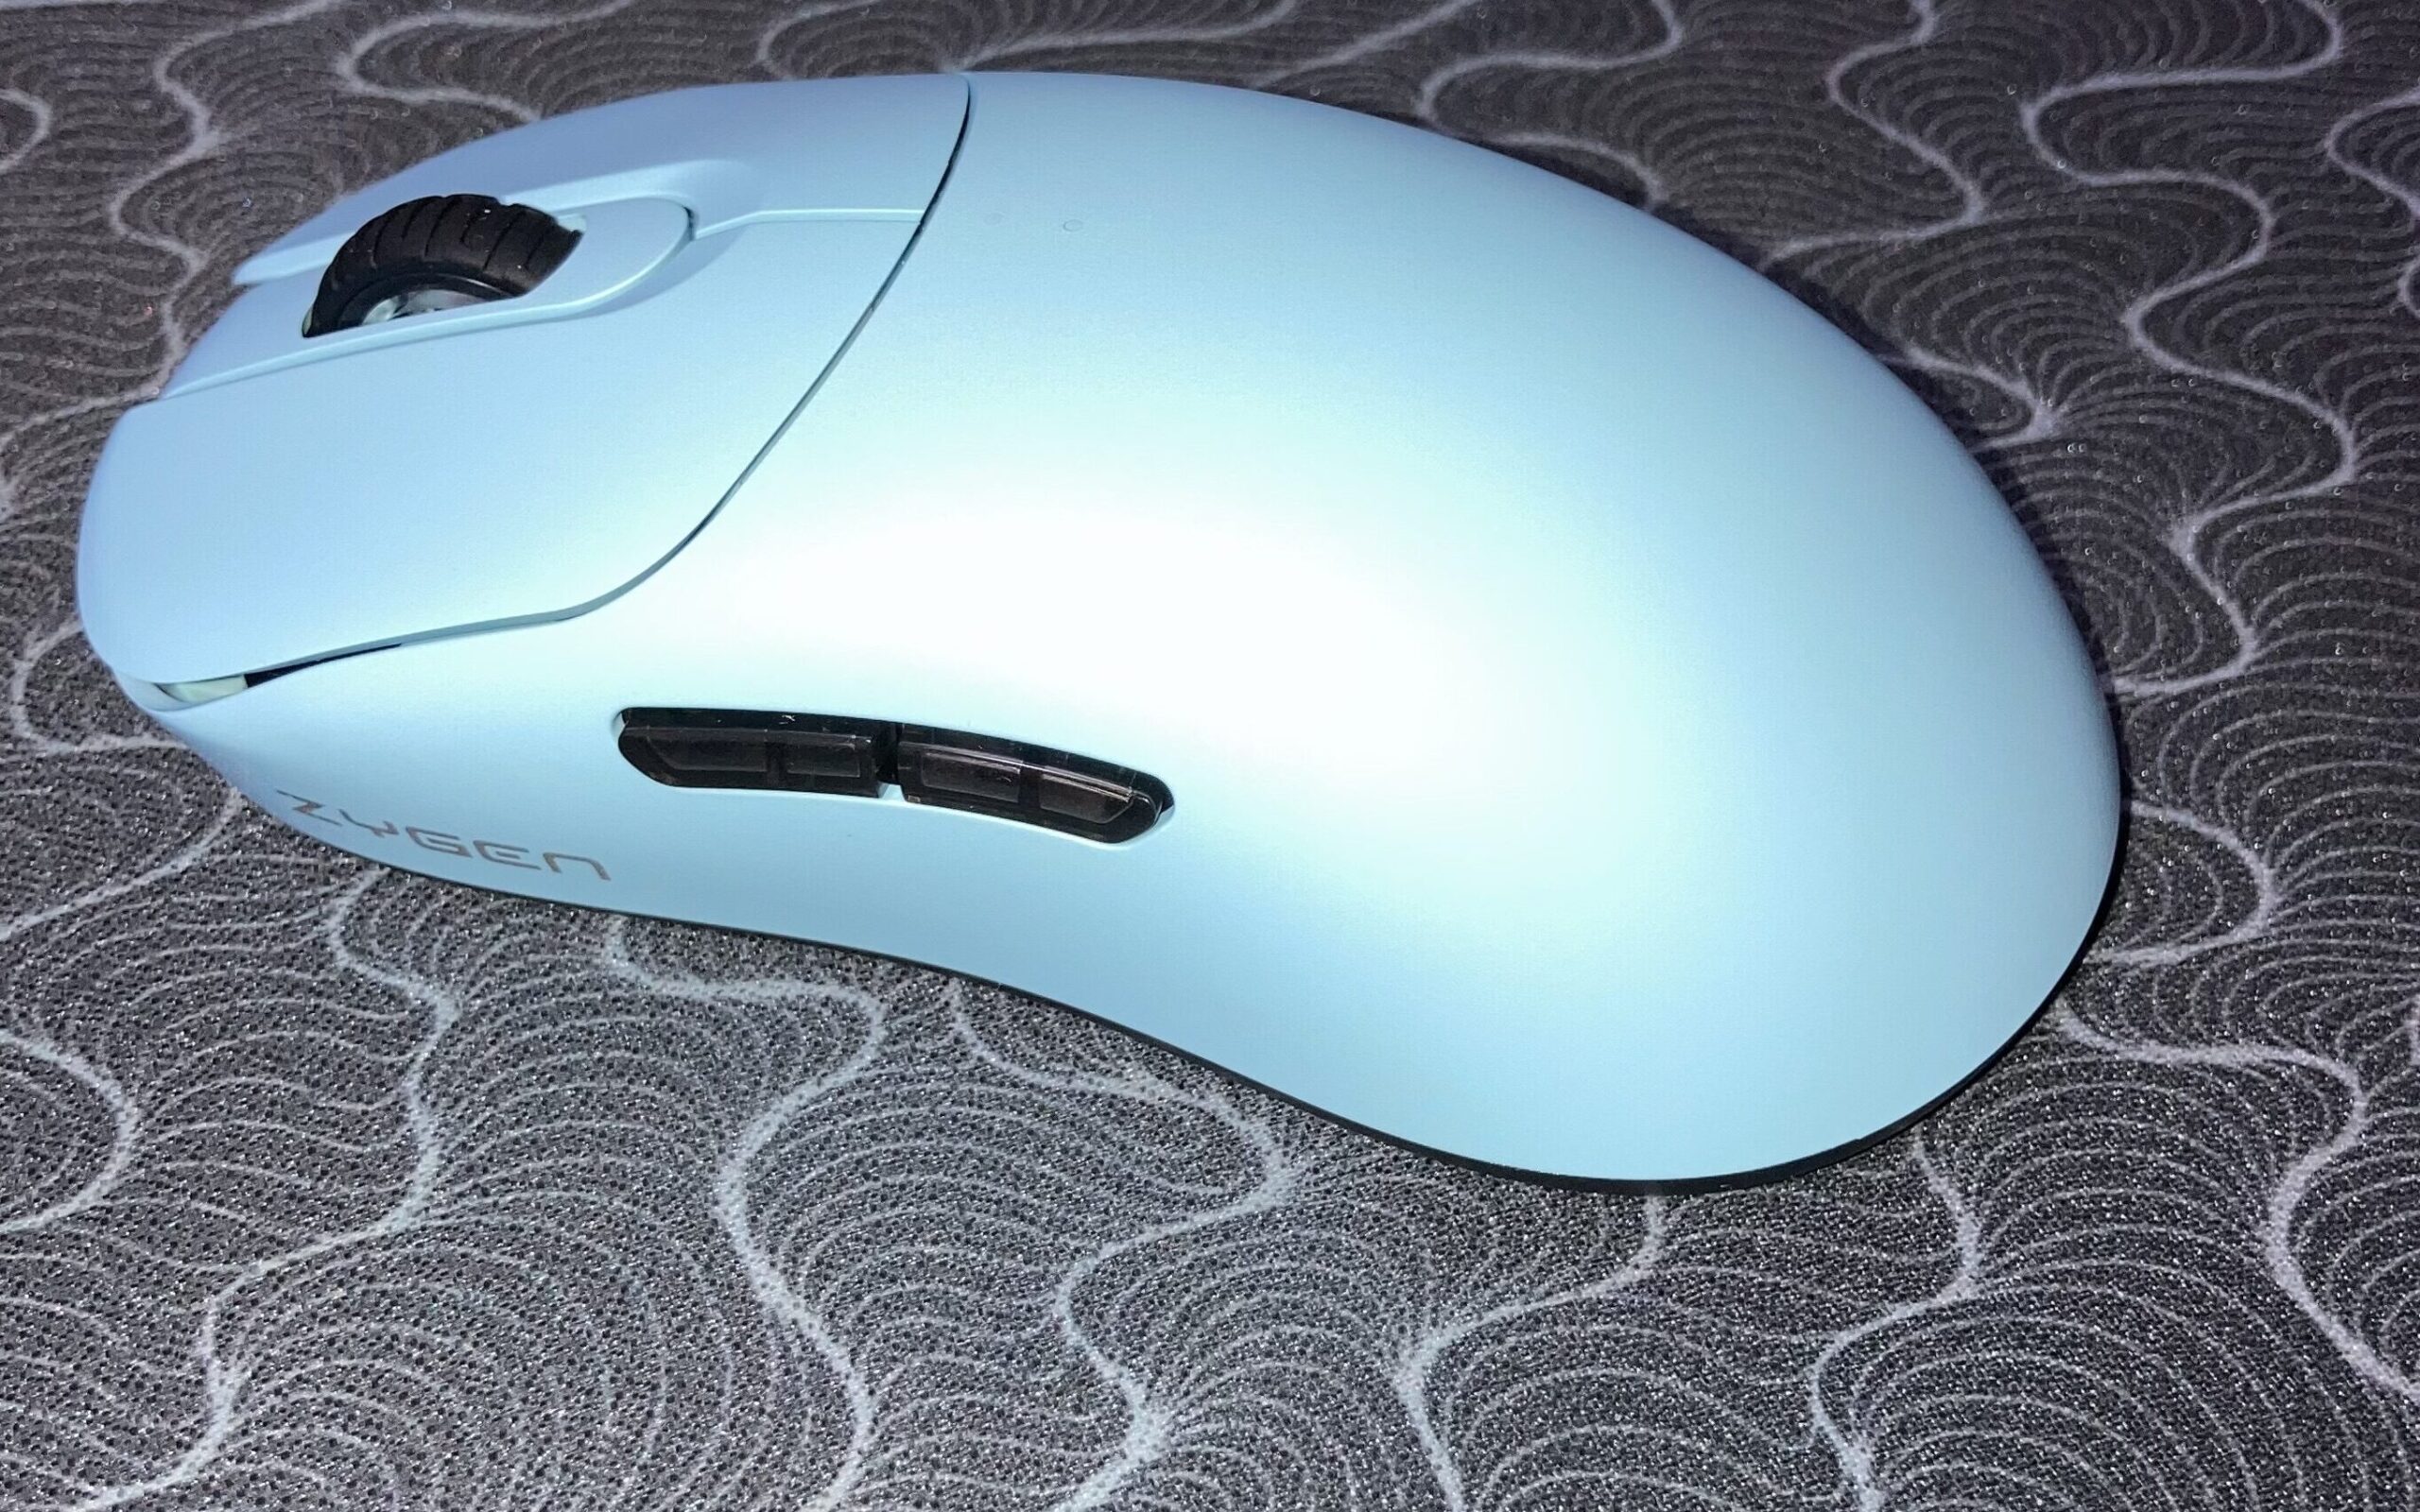 Laz(ラズ)愛用のマウス】ZYGEN NP-01S Wirelessのおすすめ設定